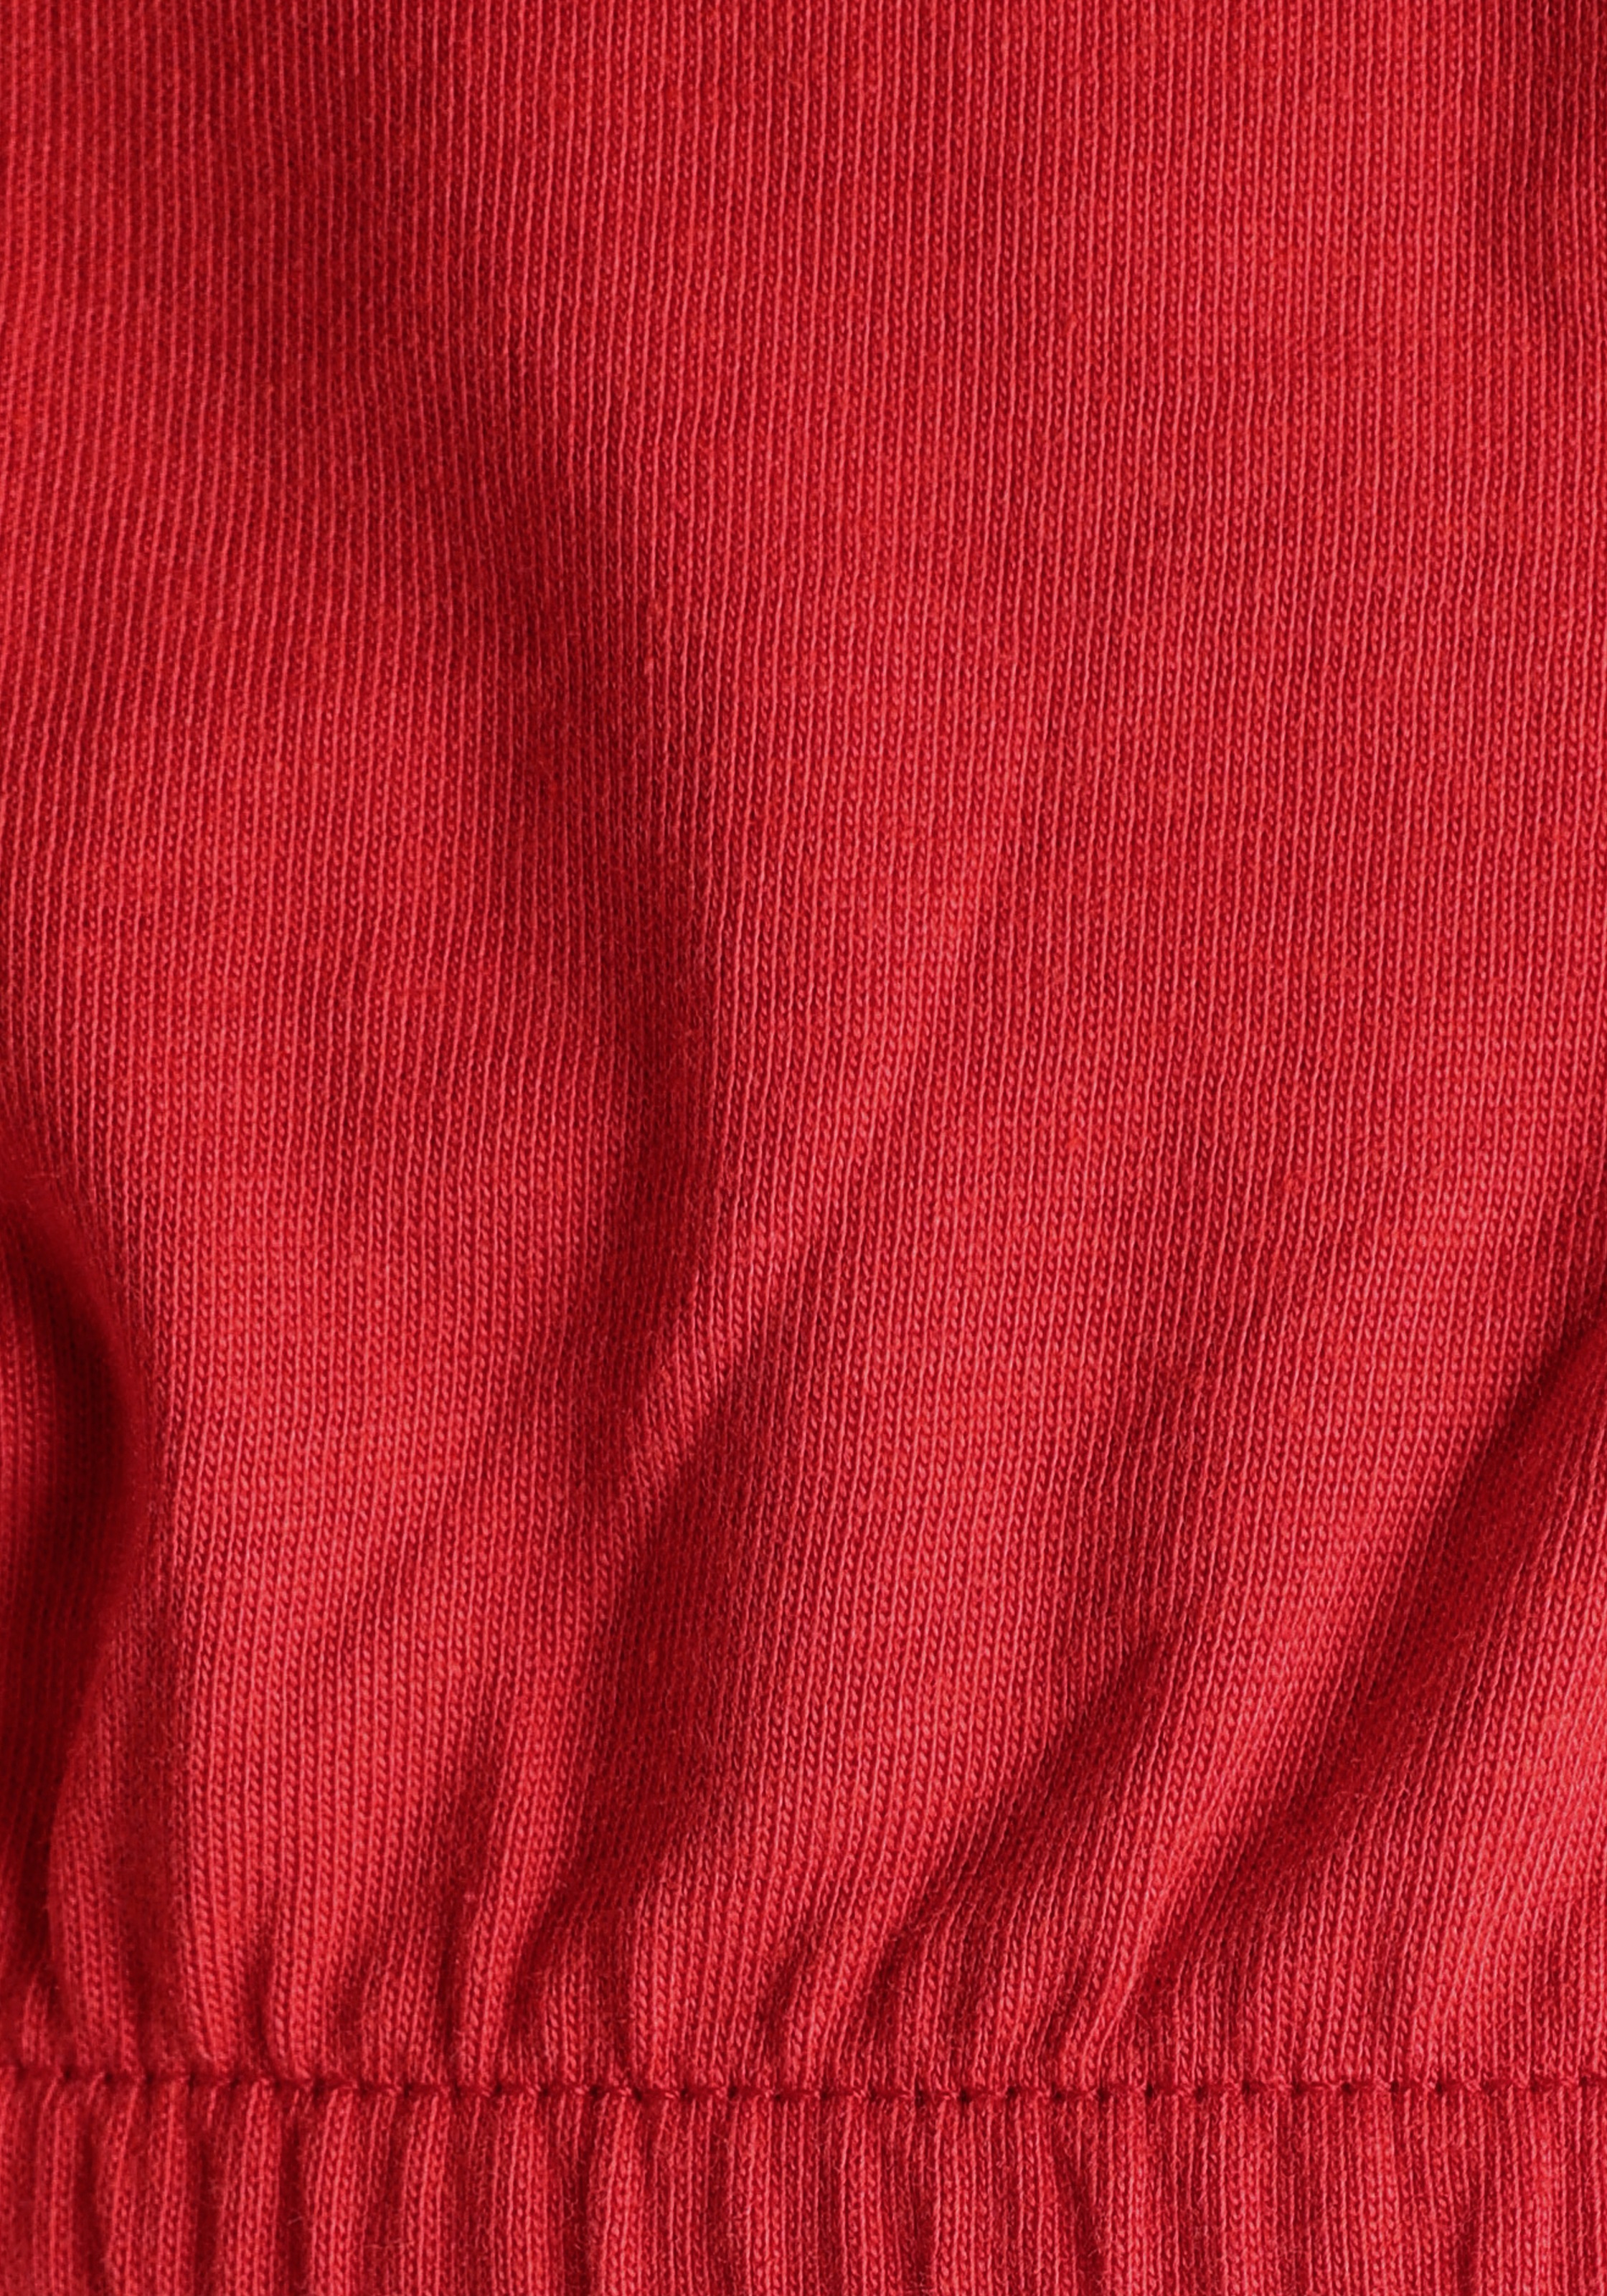 Arizona Fledermausshirt, bei ♕ geschnitten Weit